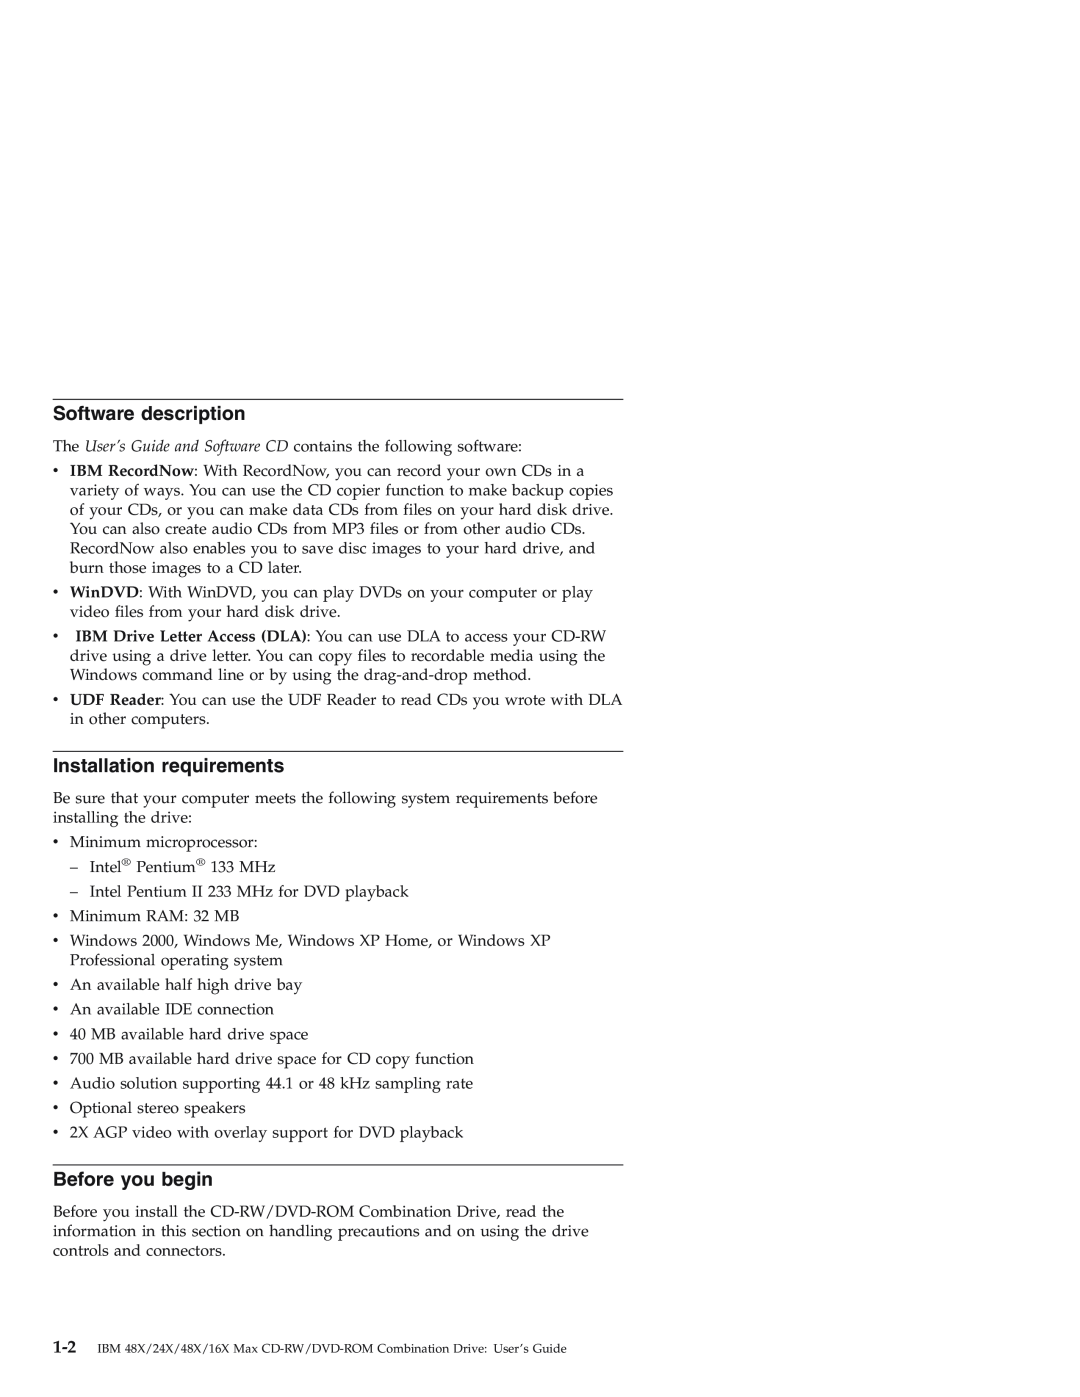 IBM 22P7035 manual Software description, Installation requirements, Before you begin 